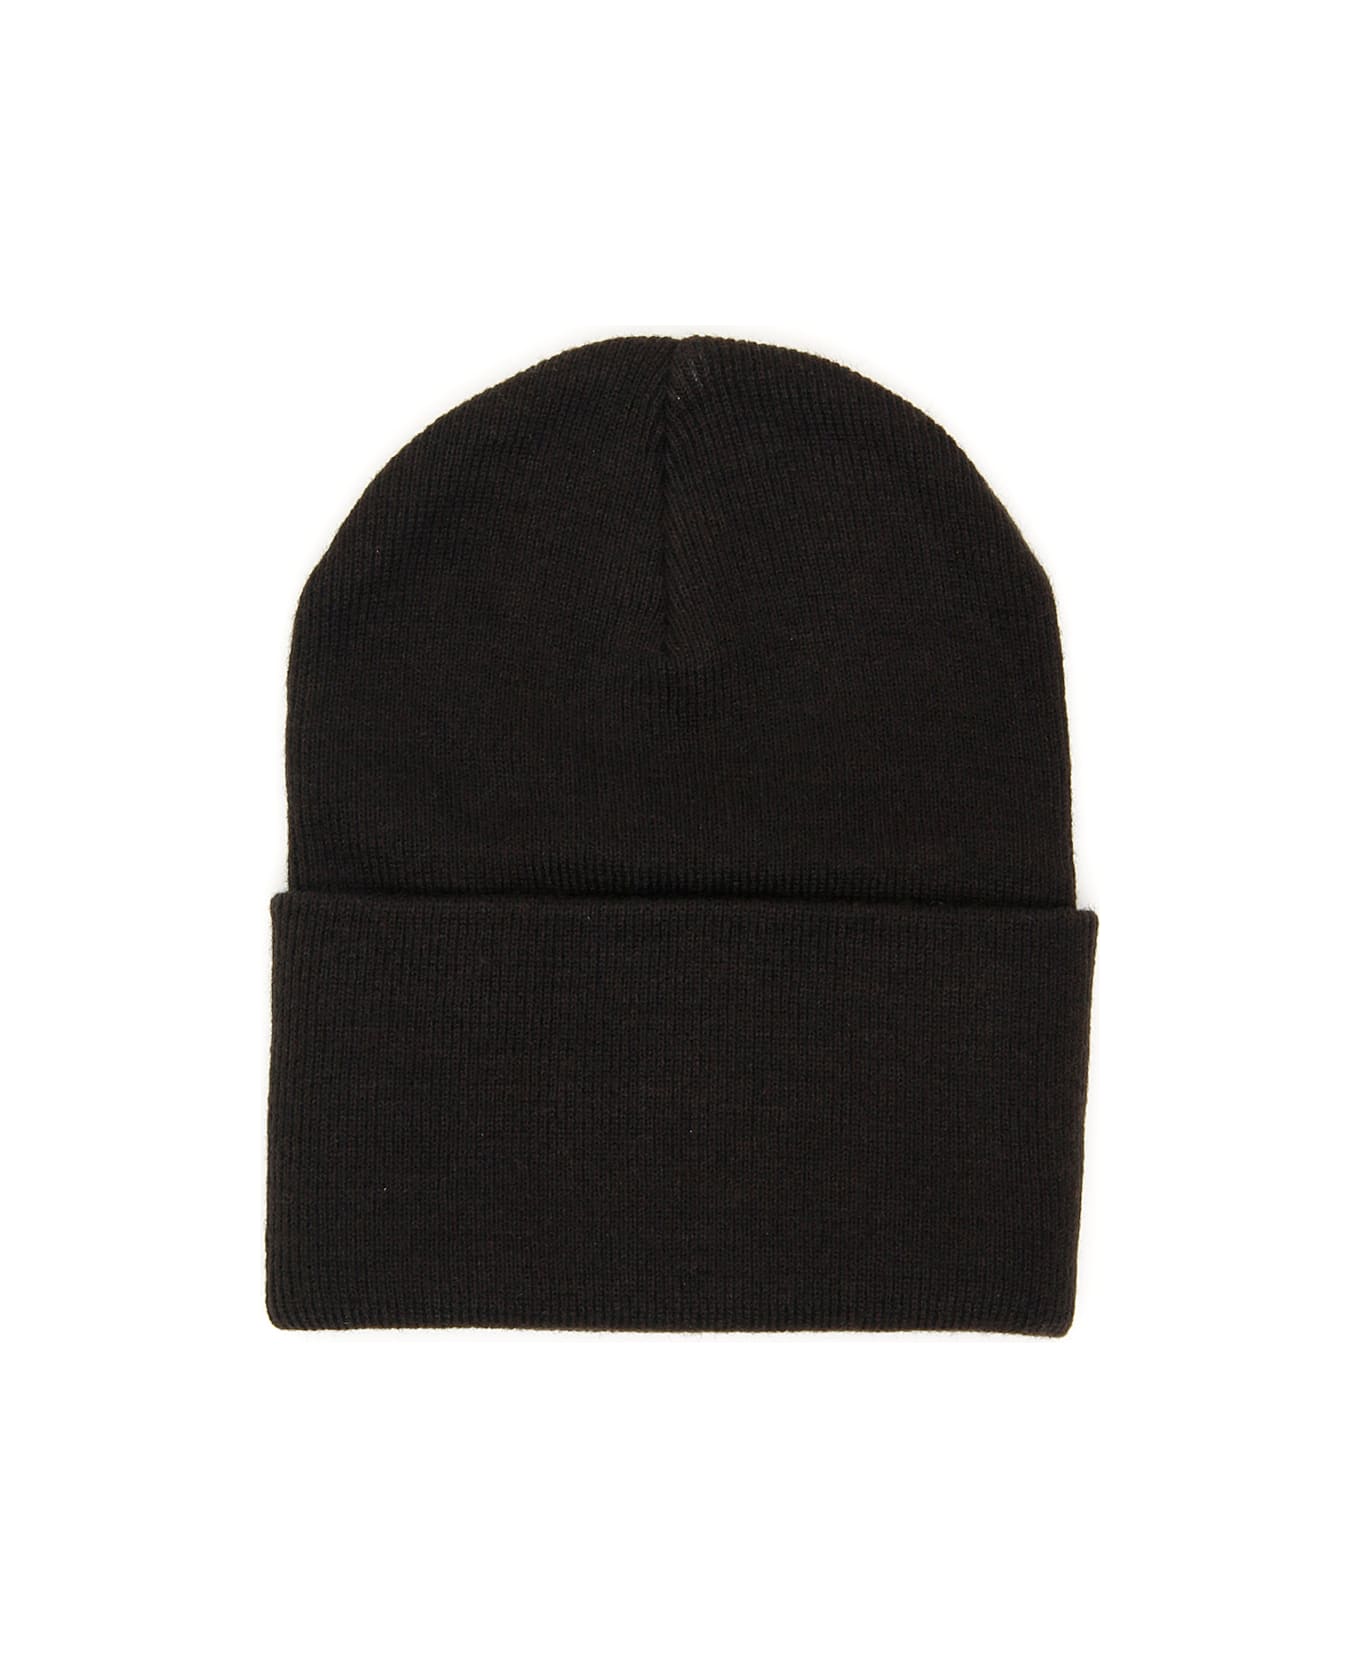 Carhartt Beanie Hat With Logo Patch - Black